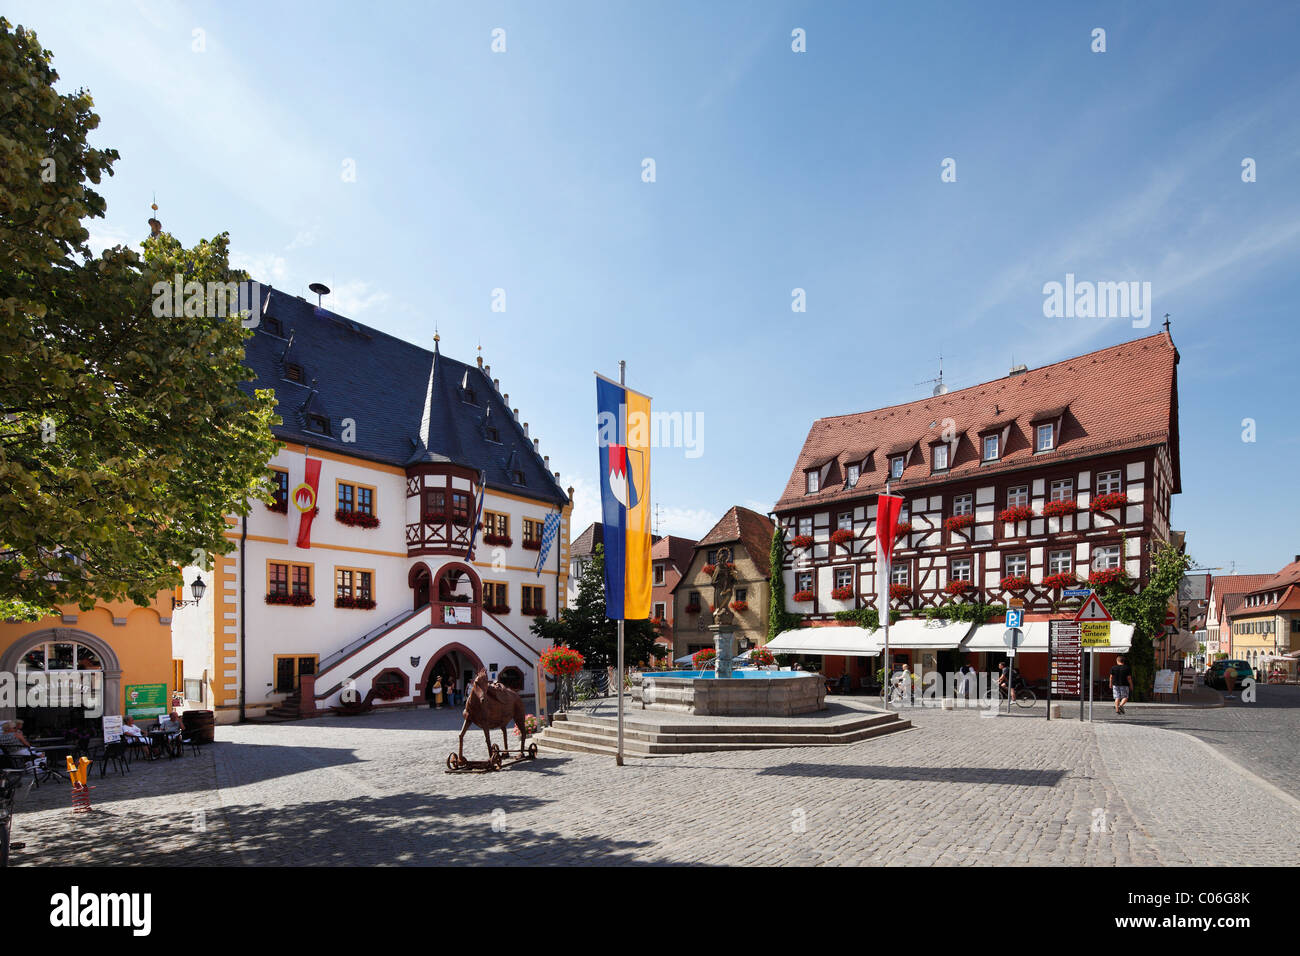 Market square with town hall, Volkach, Main-Franconia region, Lower Franconia, Franconia, Bavaria, Germany, Europe Stock Photo